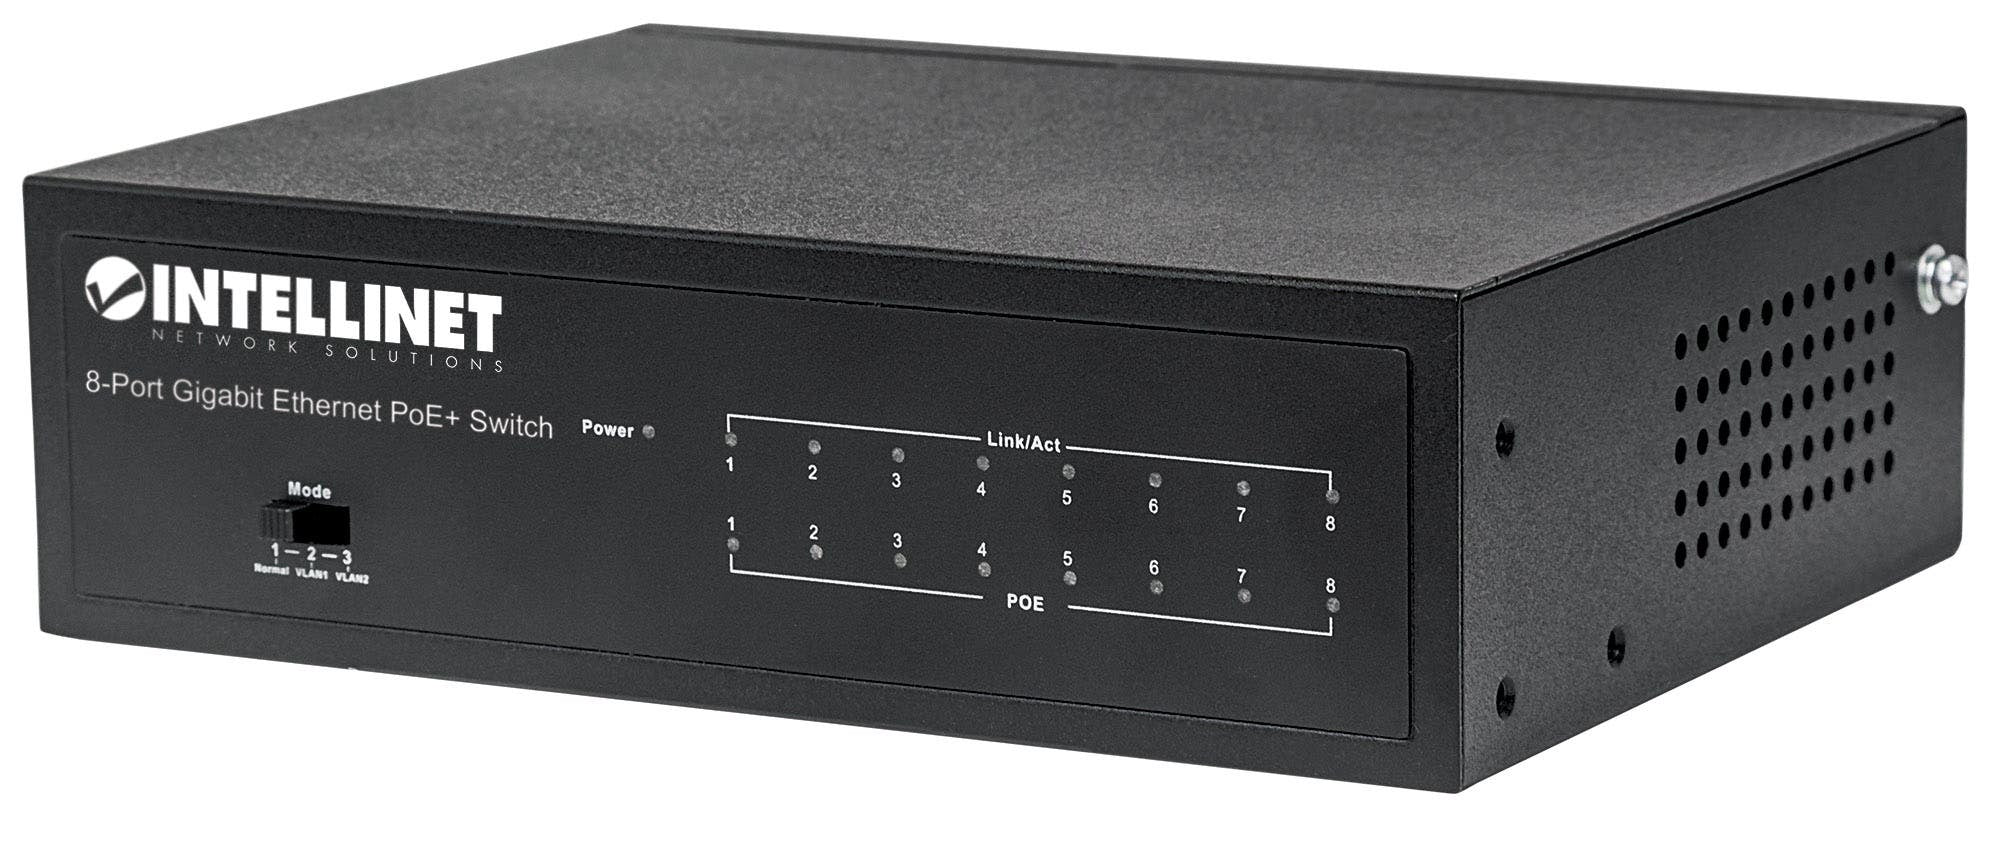 Intellinet 8-Port Gigabit Ethernet PoE+ Switch, IEEE 802.3at/af Power over Ethernet (PoE+/PoE) Compliant, 60 W, Desktop (UK power cord)